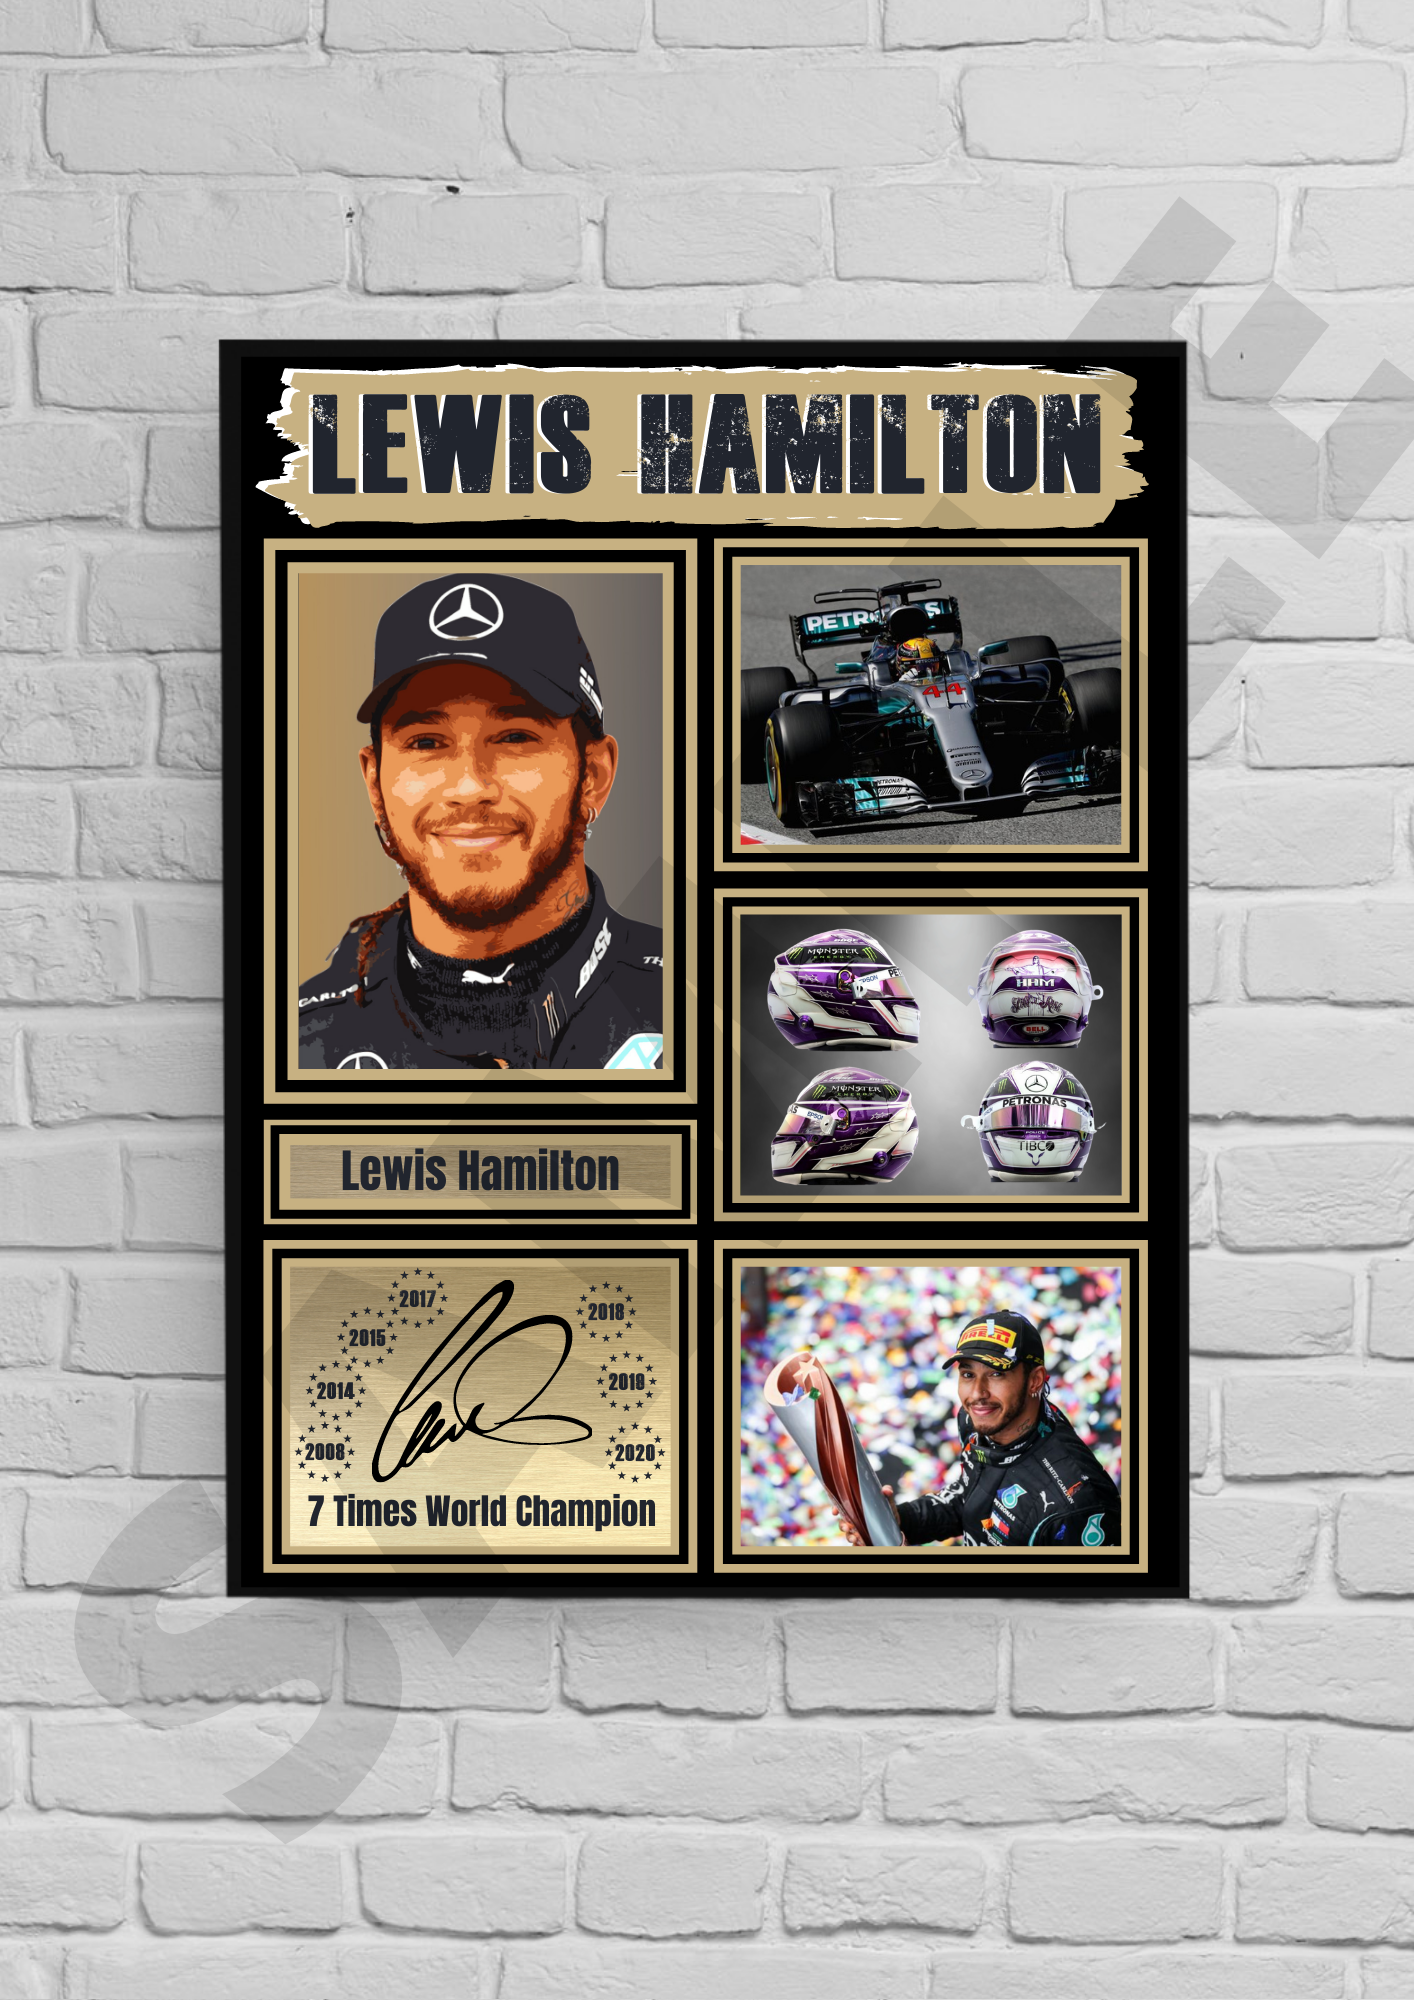 Lewis Hamilton (Formula 1) #20 - Signed collectible/memorabilia/print